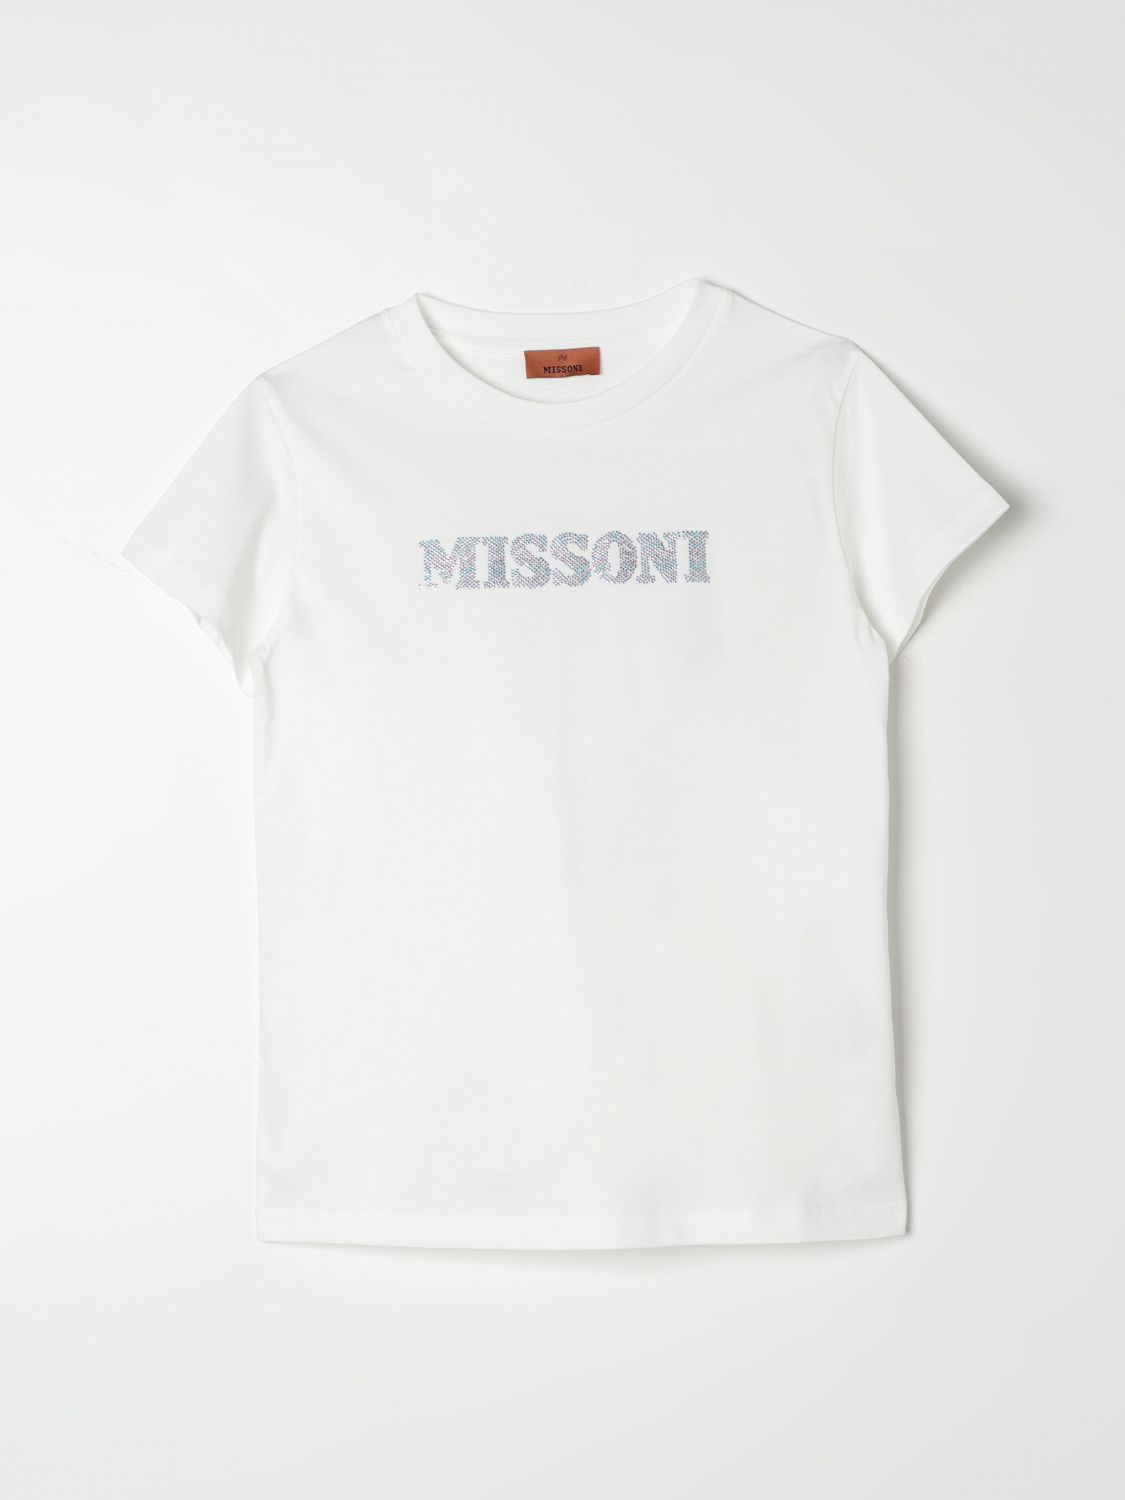 Missoni Kids' Girls White Organic Cotton T-shirt